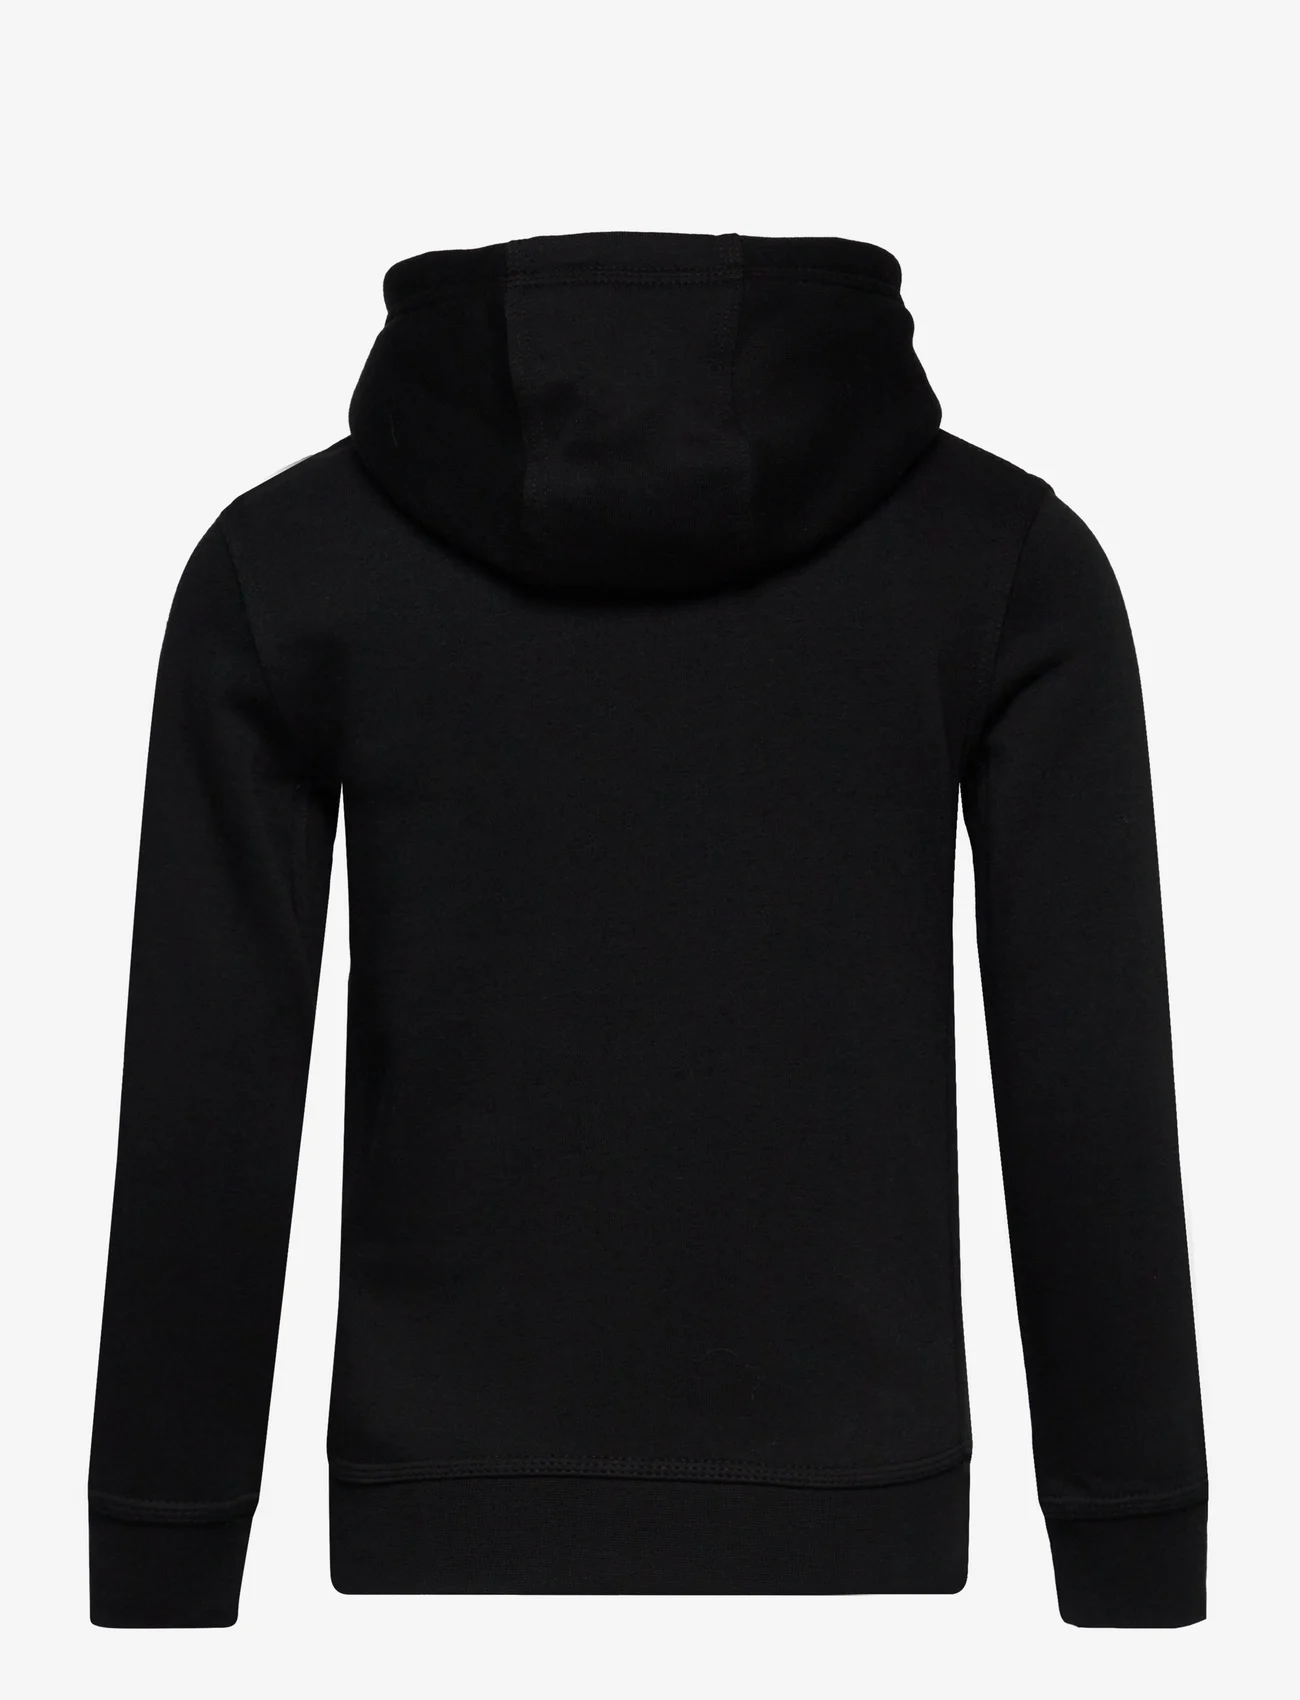 Nike - CLUB HBR PO - hoodies - black/metallic gold - 1